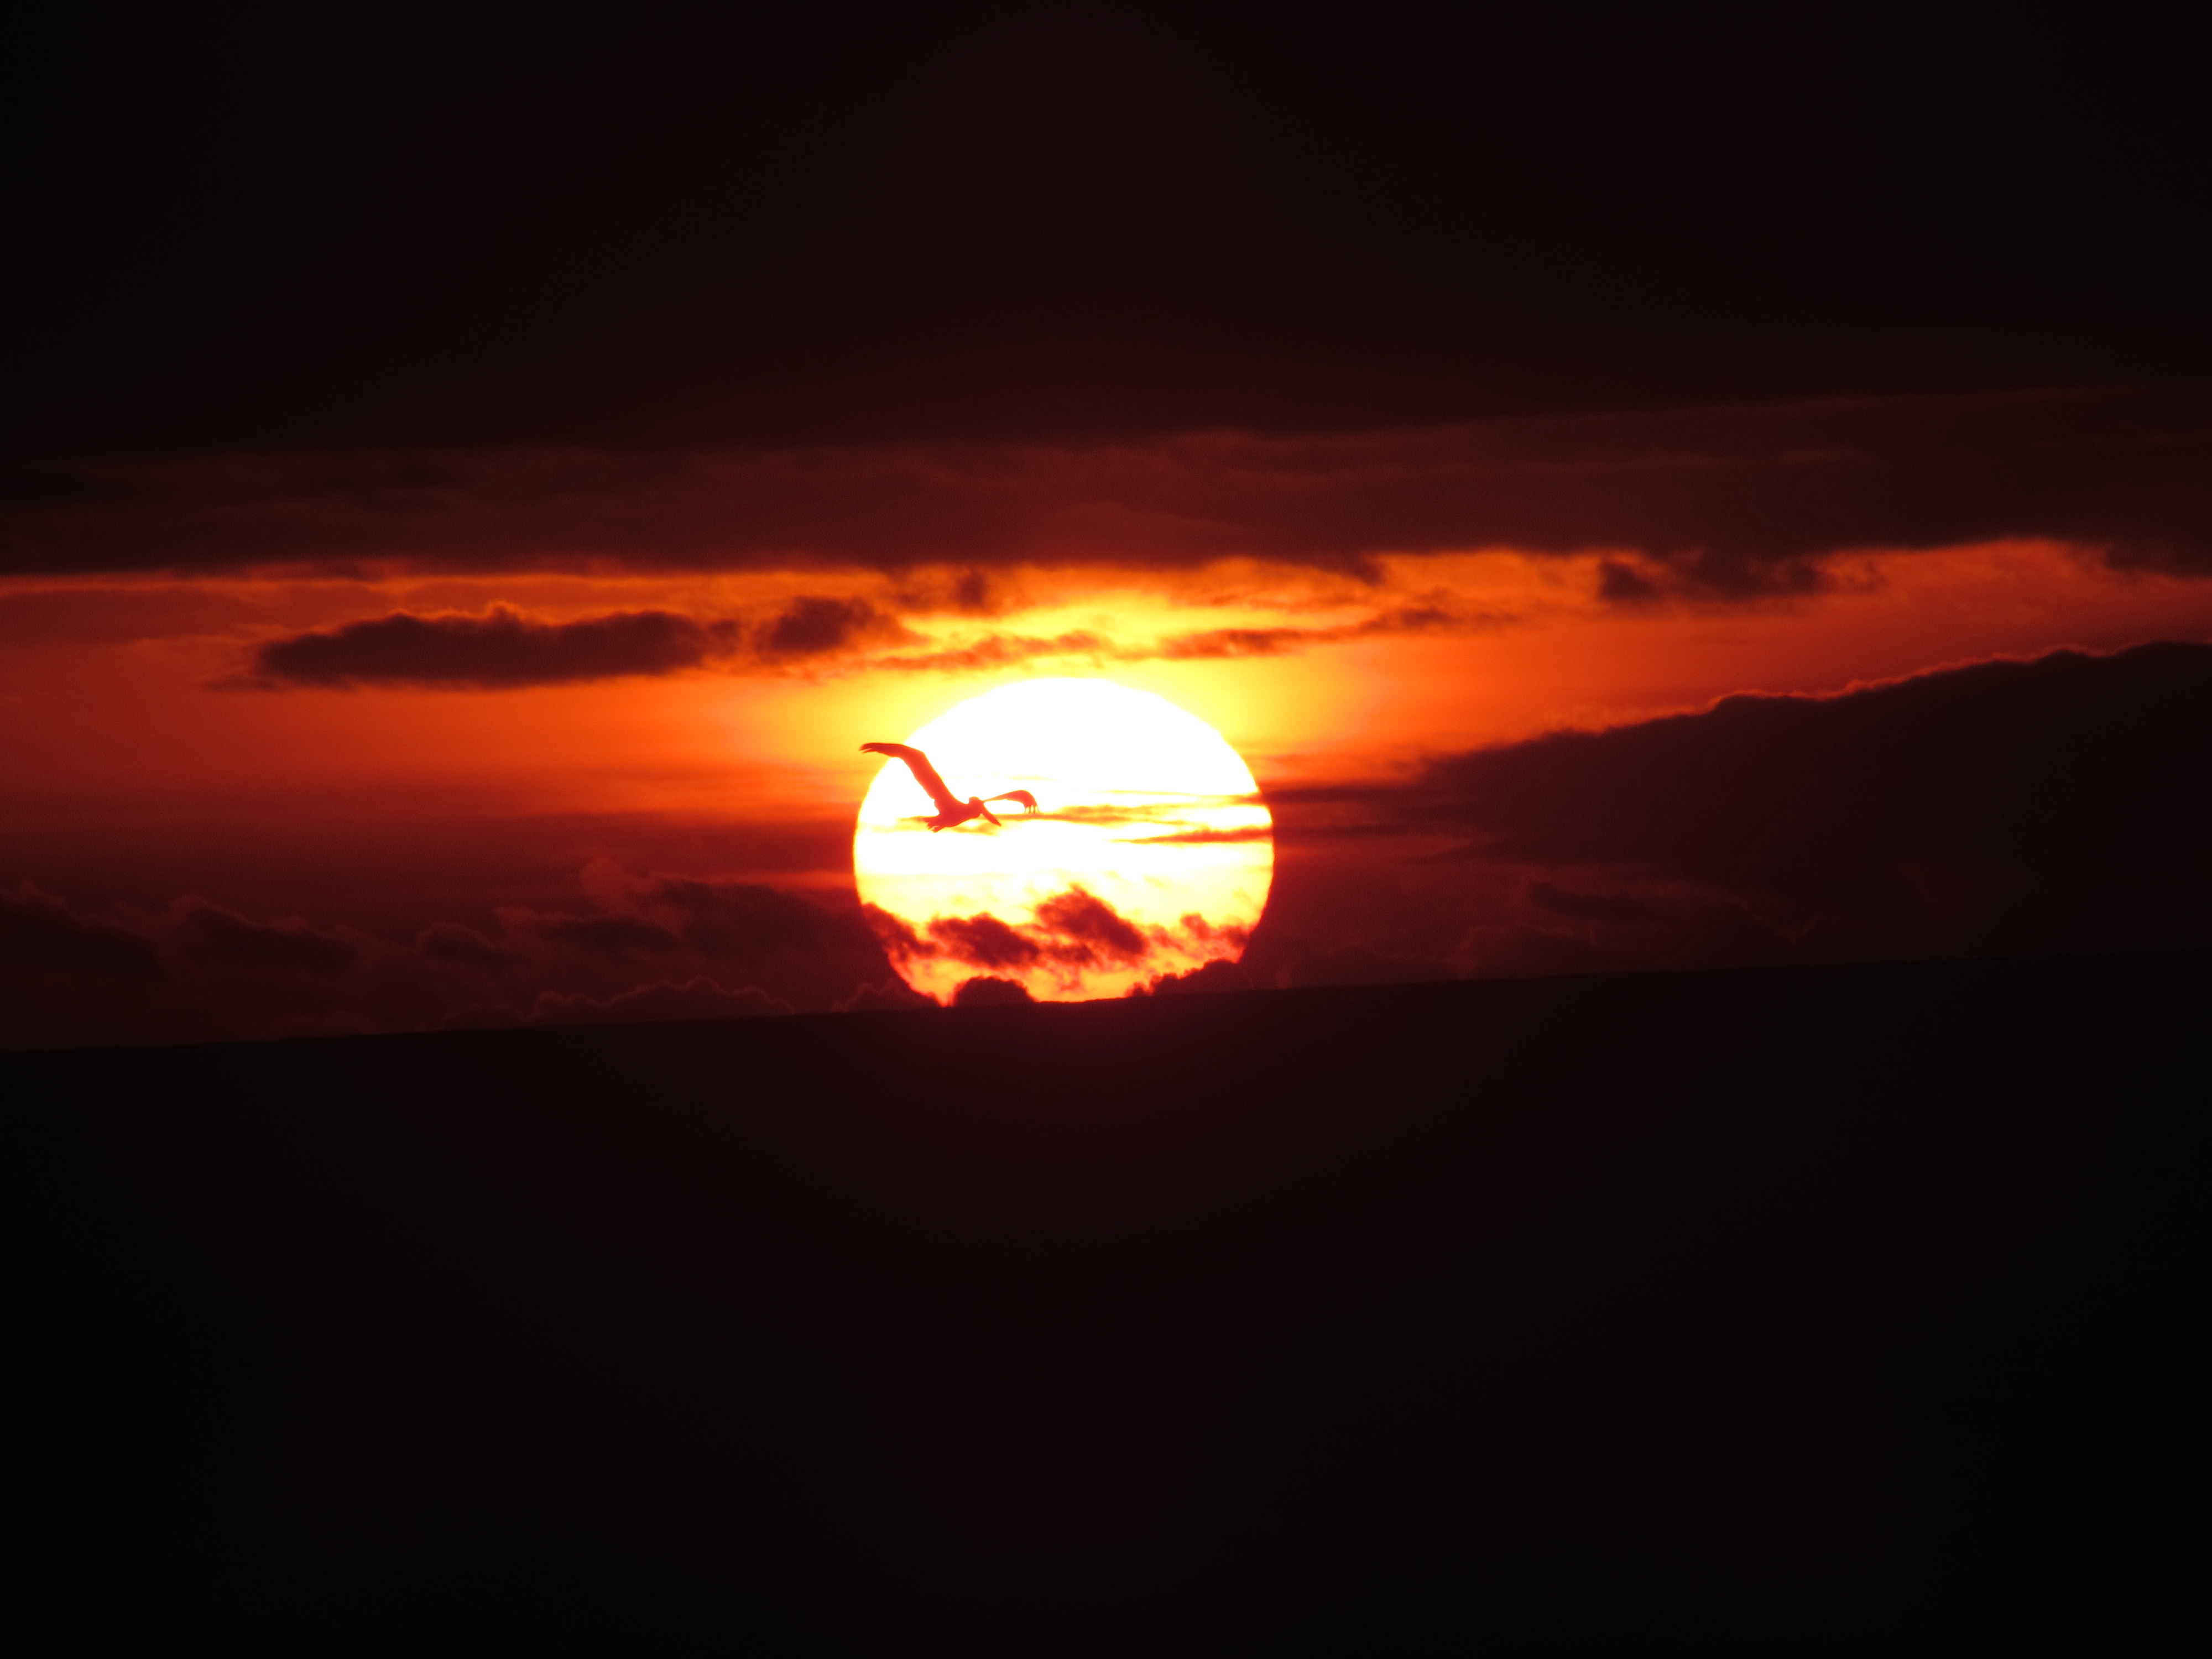 Brown Pelican and the setting sun – Mendonoma Sightings